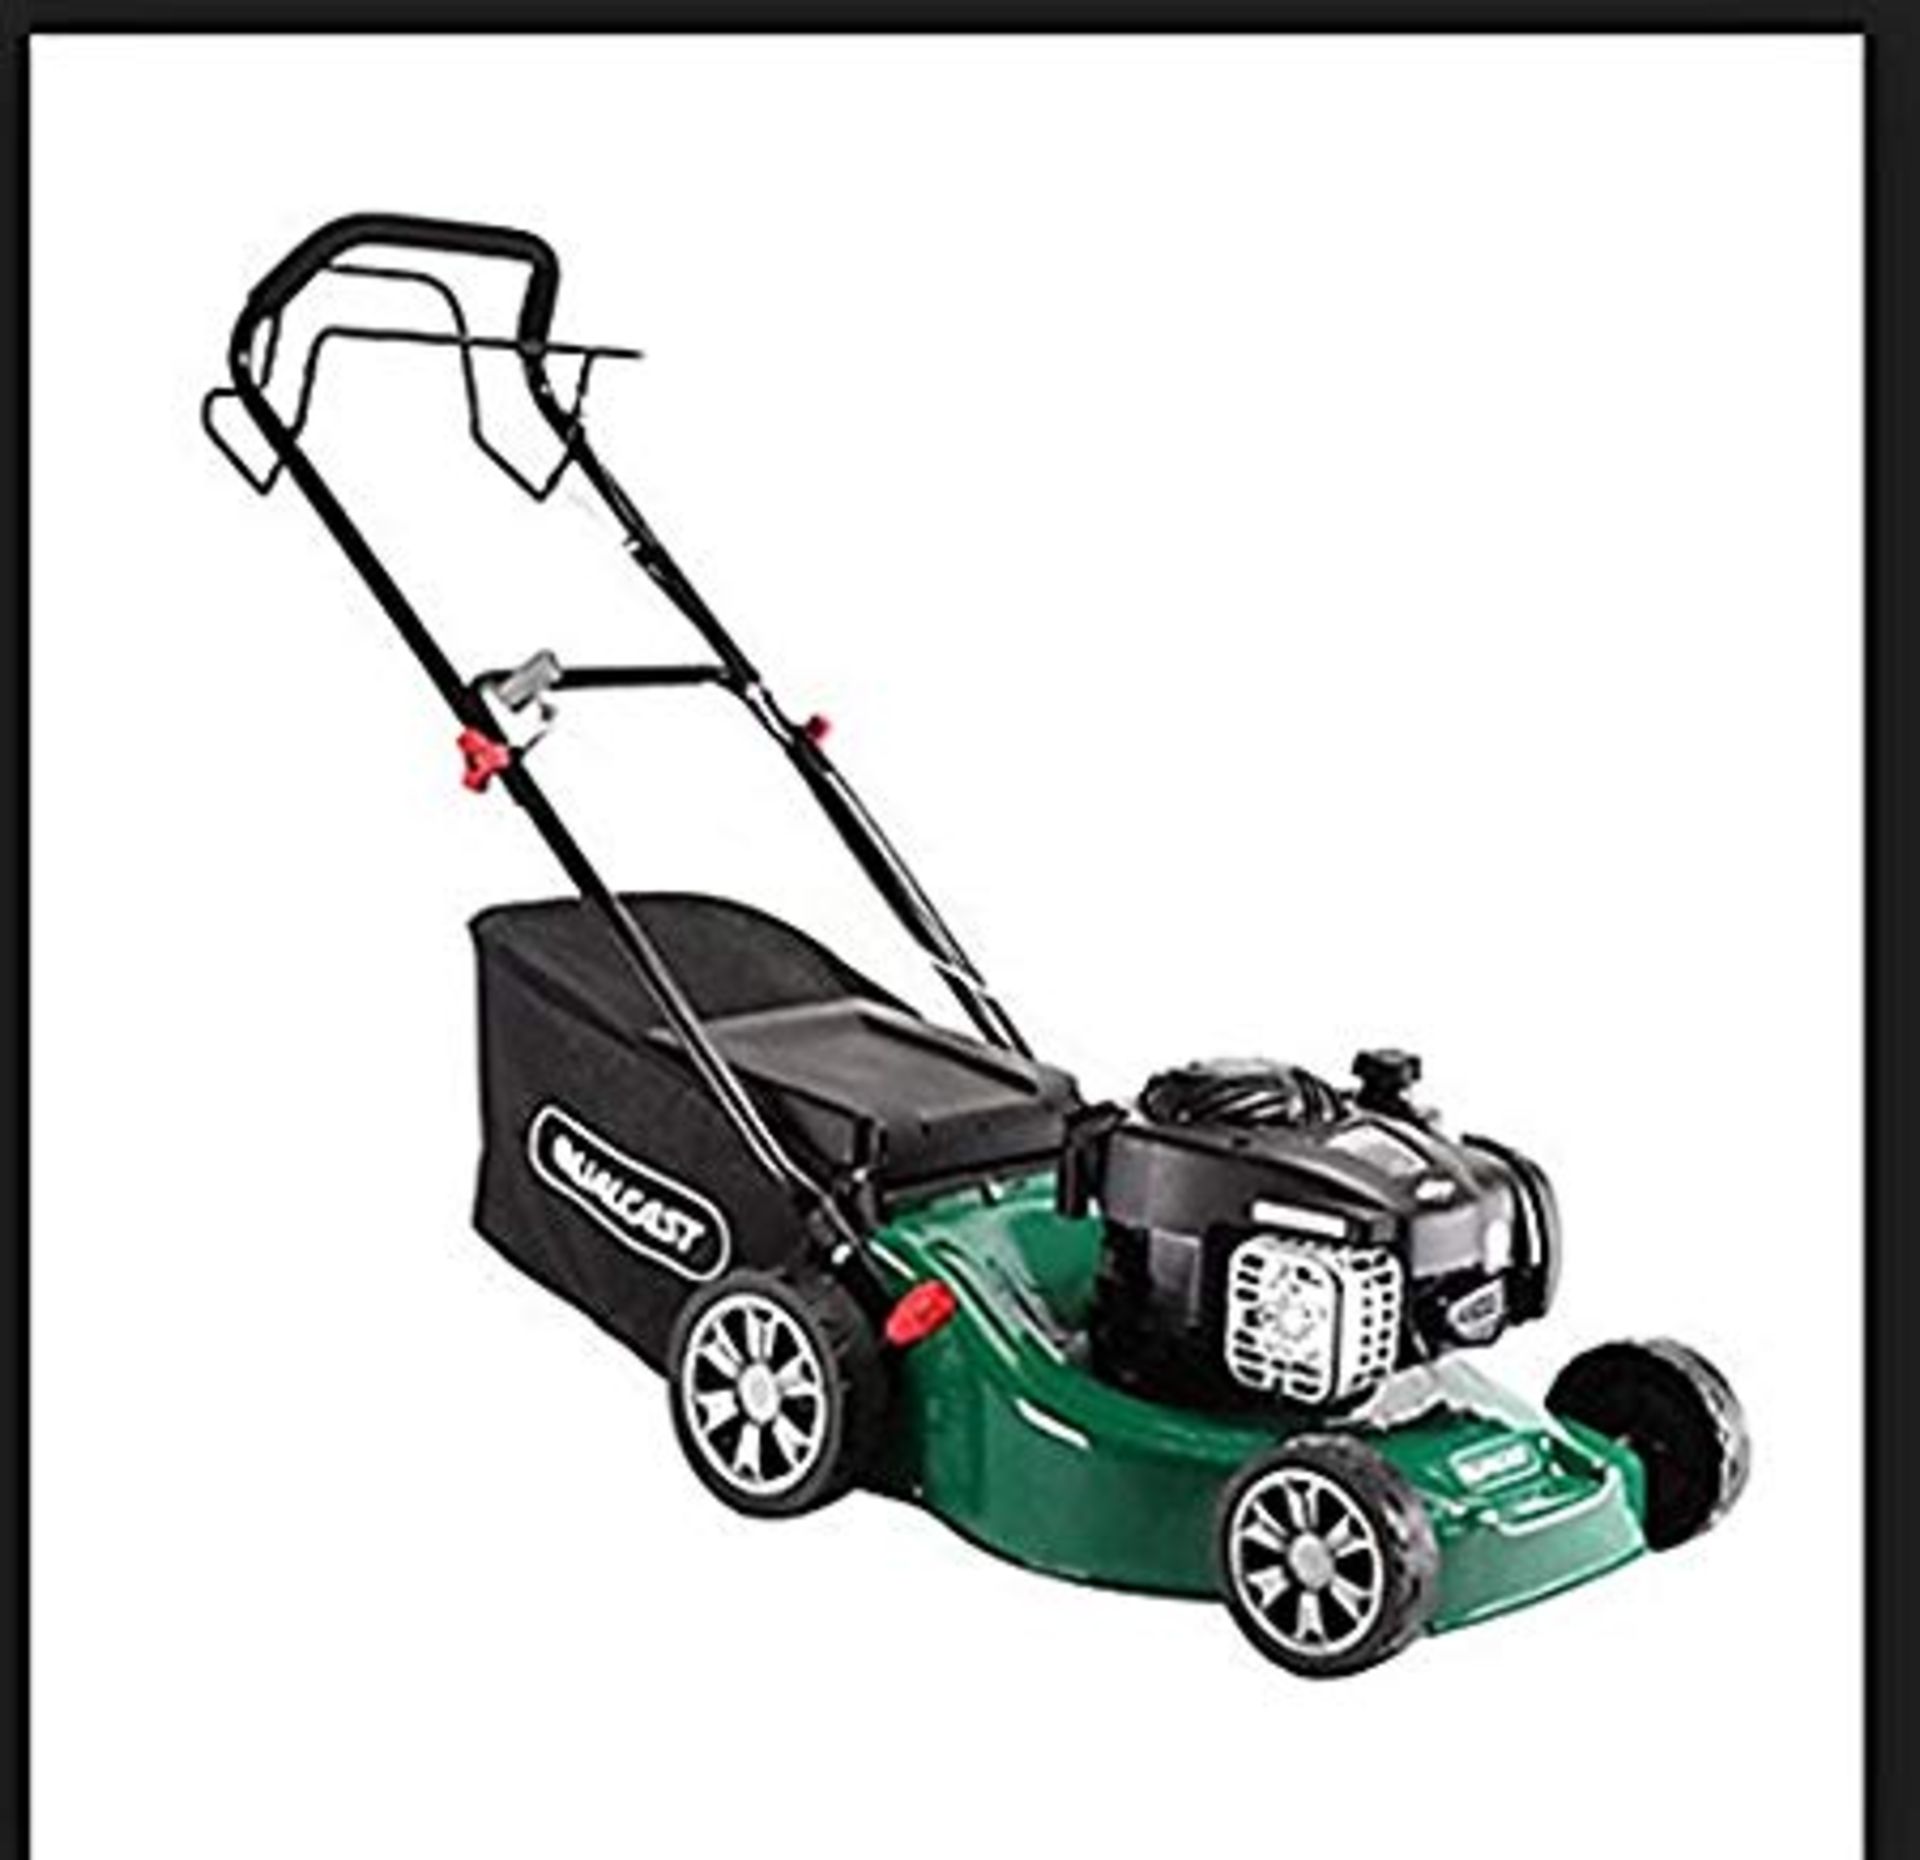 V Brand New Qualcast QP41 41cm 125cc Push Petrol Rotary Lawn Mower - 45L Collect Volume - Adjustable